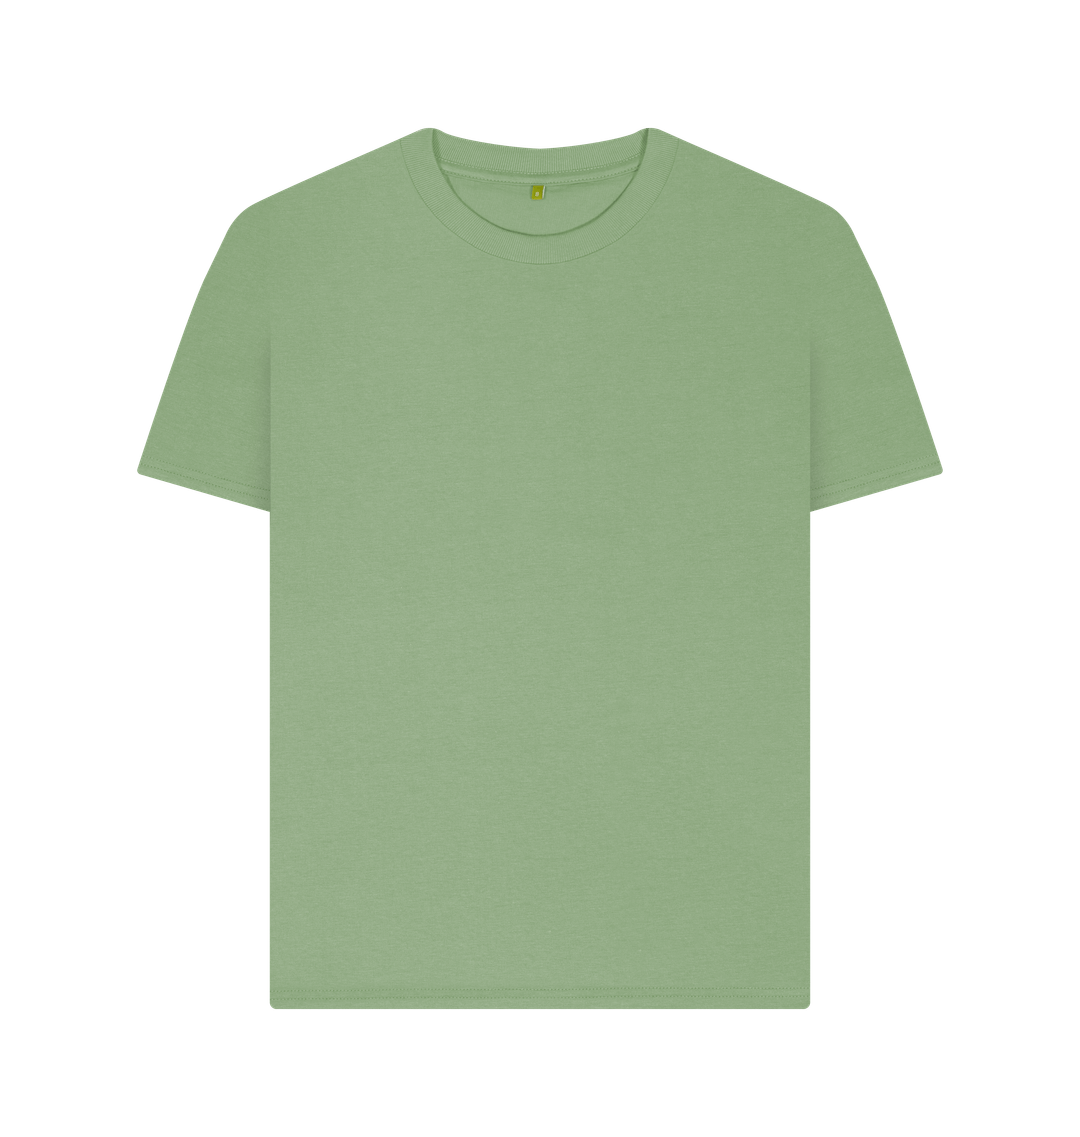 Women's Plain T - shirt - Printed T - shirt